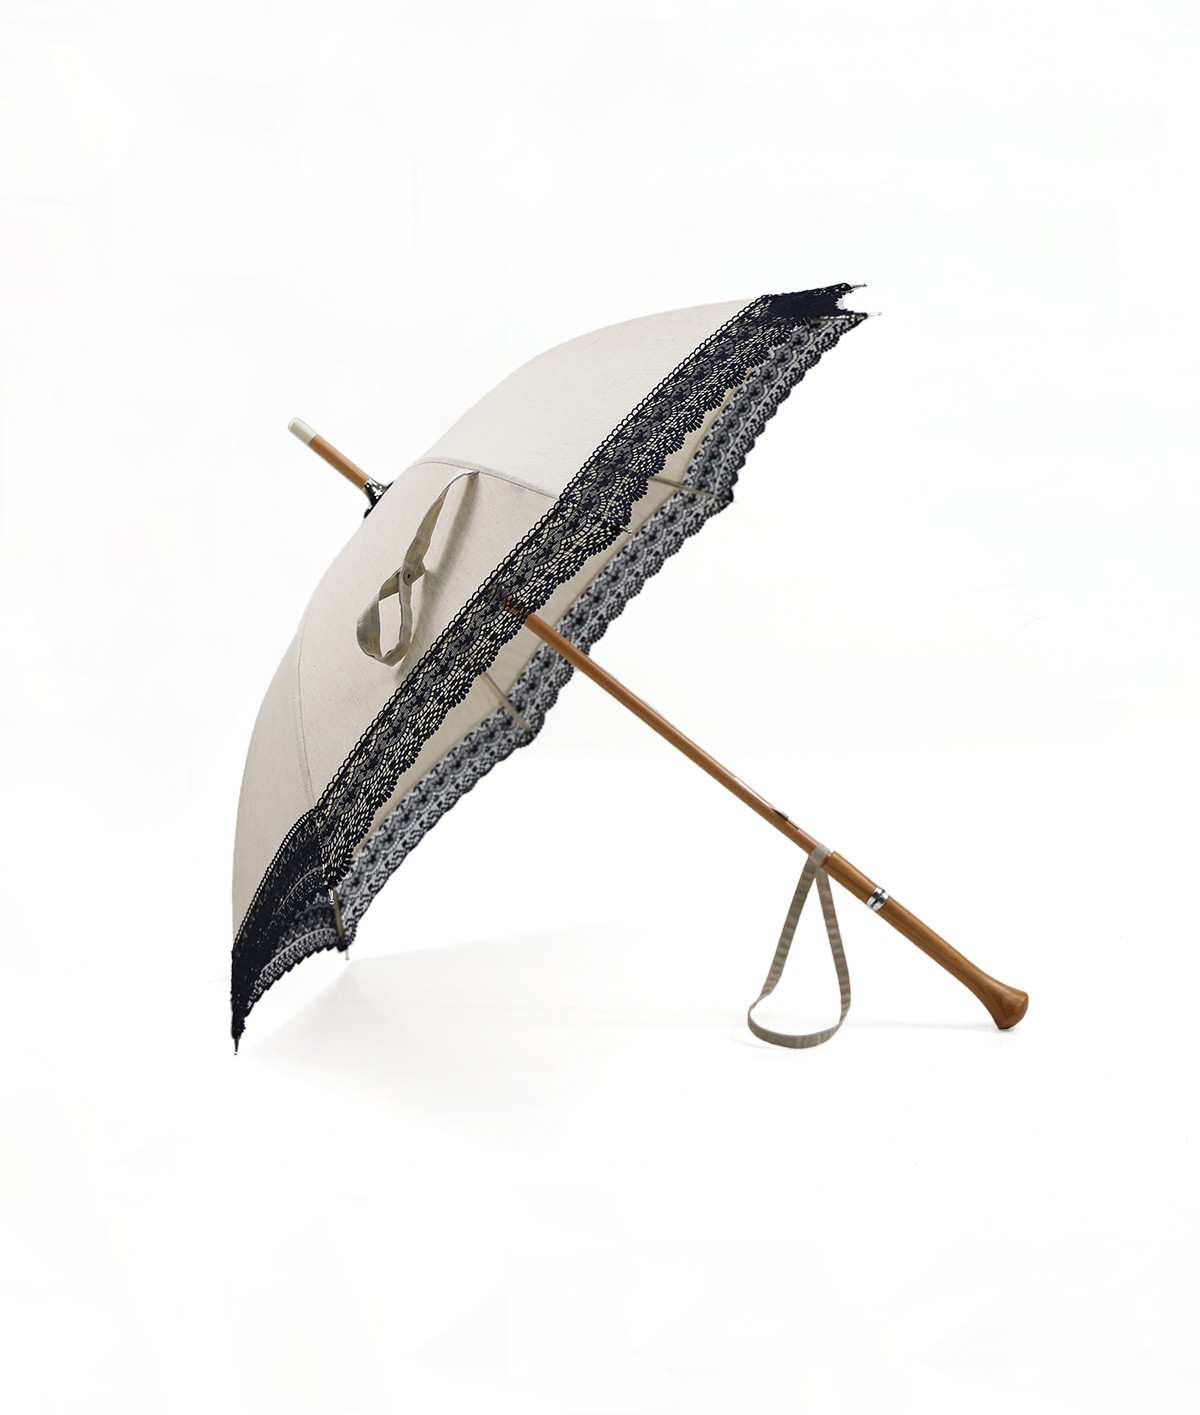 Parasol "Demoiselle" - Long - Sun Umbrellas Handcrafted in France by the Umbrellas Manufacturer Maison Pierre Vaux